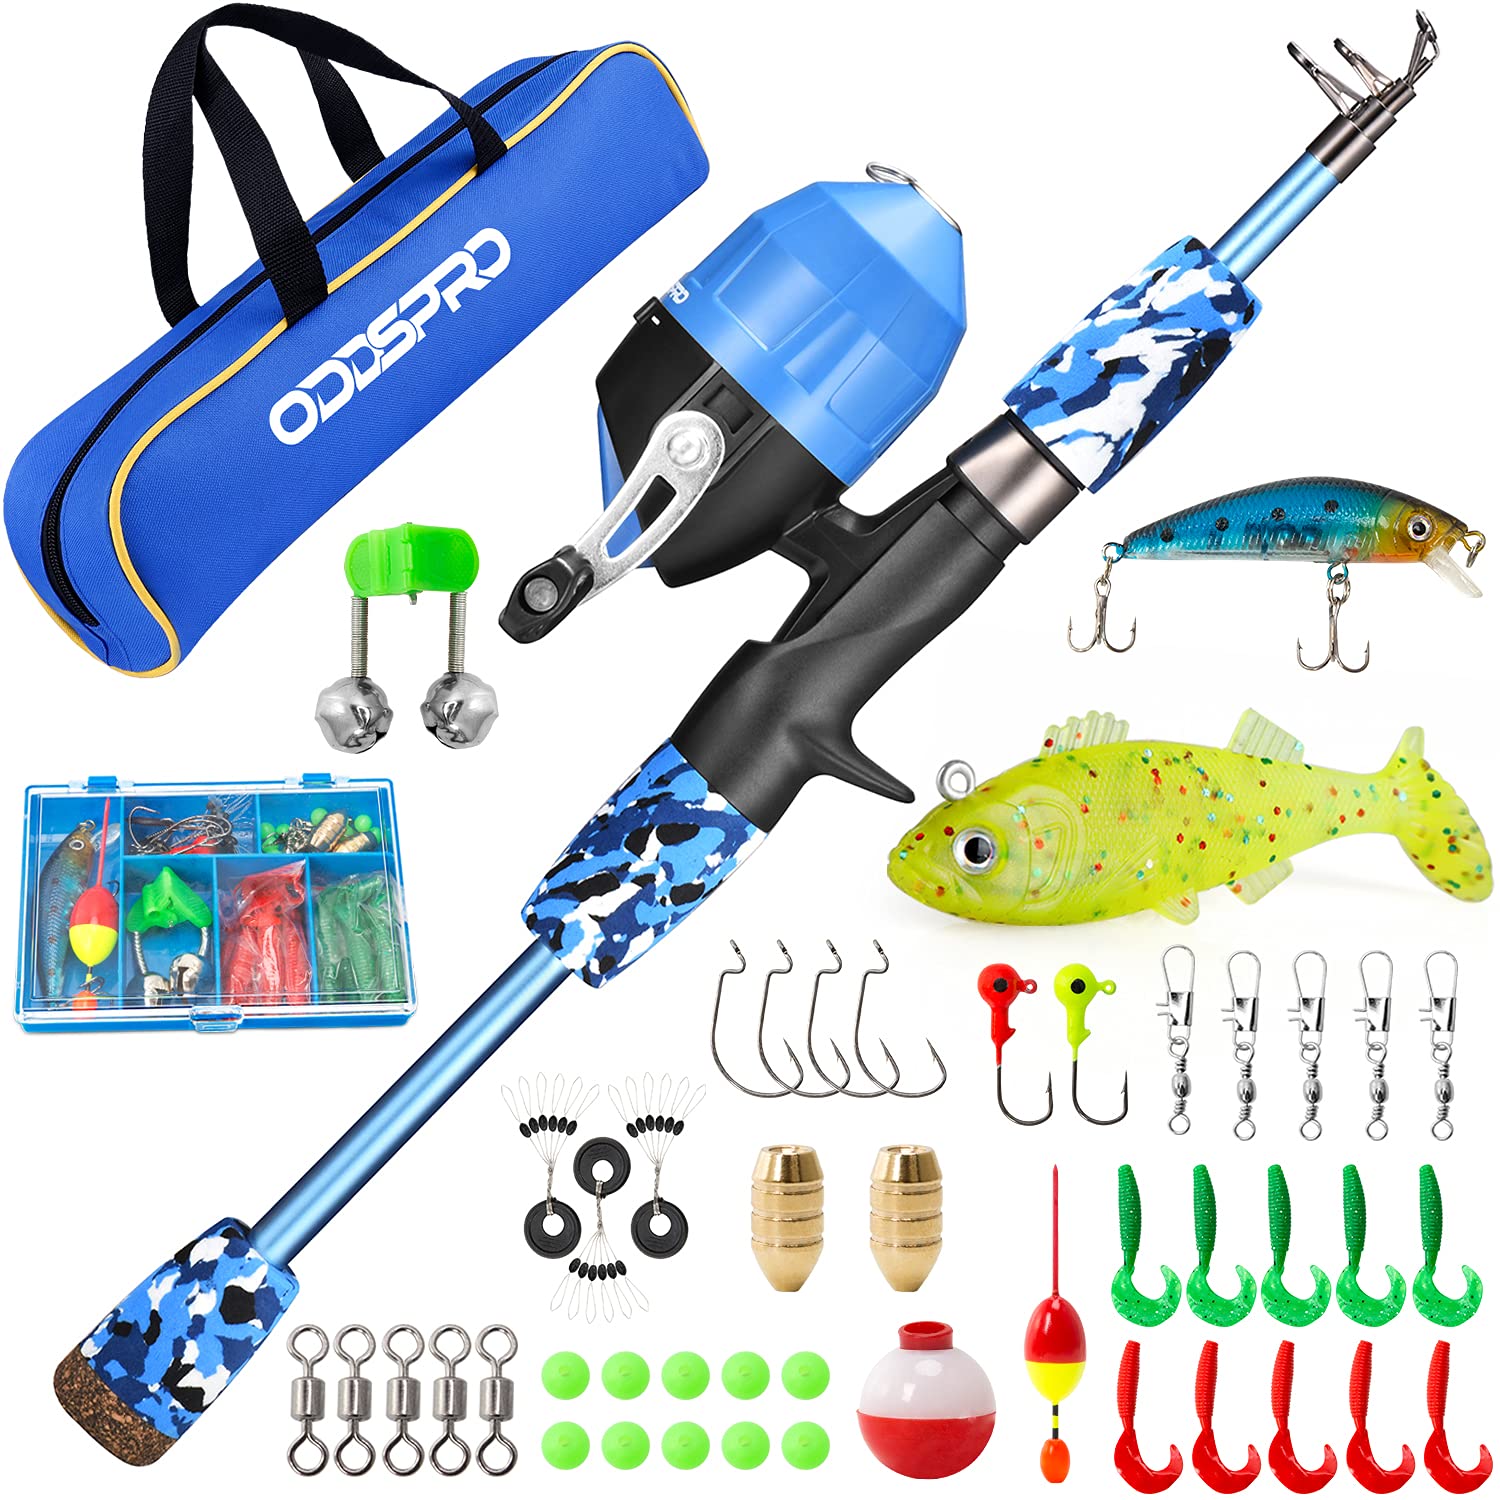 ODDSPRO Kids Fishing Pole - Kids Fishing Starter Kit - with Tackle